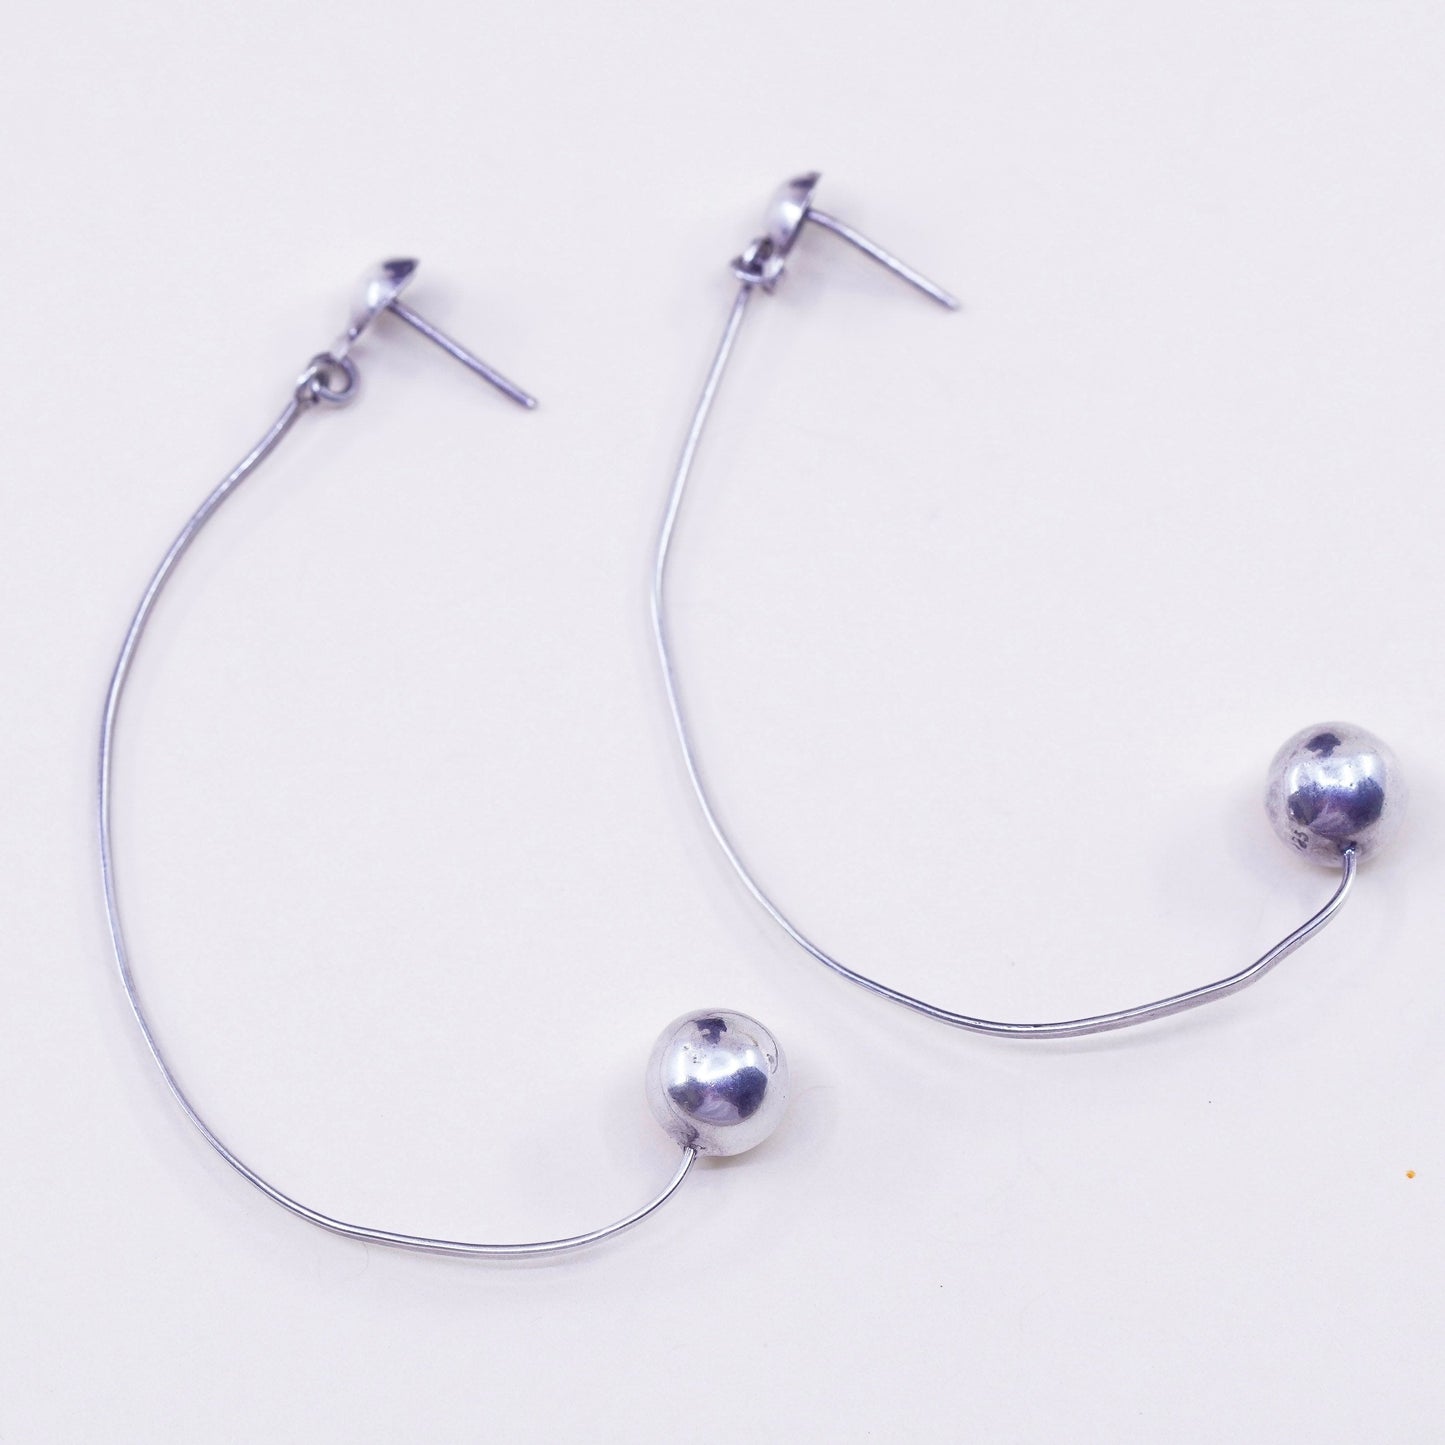 Vintage Sterling silver handmade earrings, 925 beads dangles